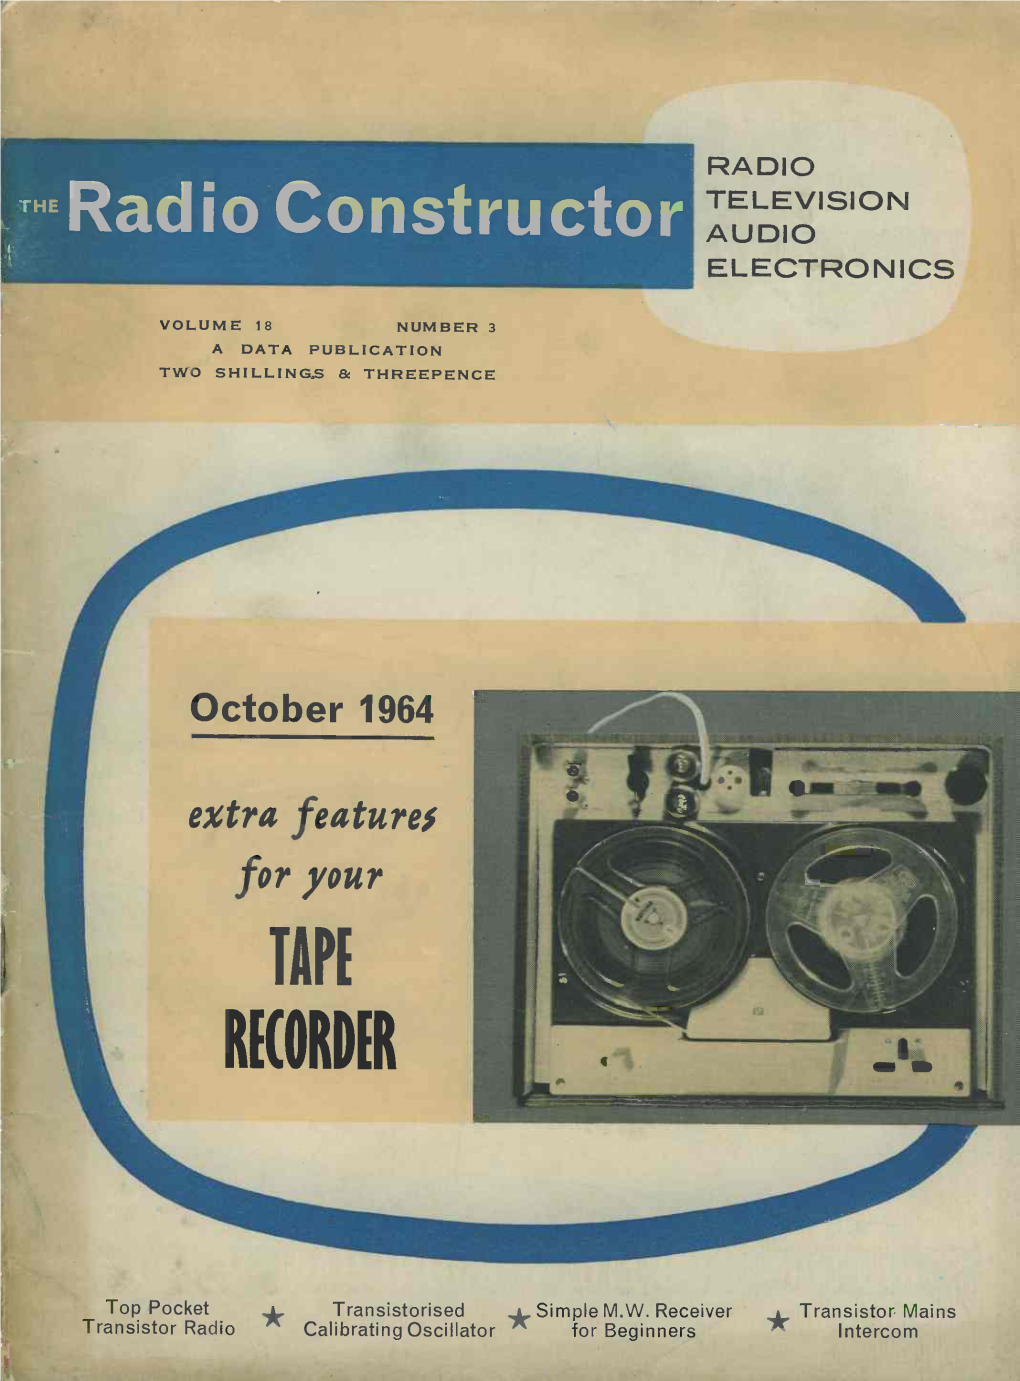 HE Radio Constructor AUDIO ELECTRONICS